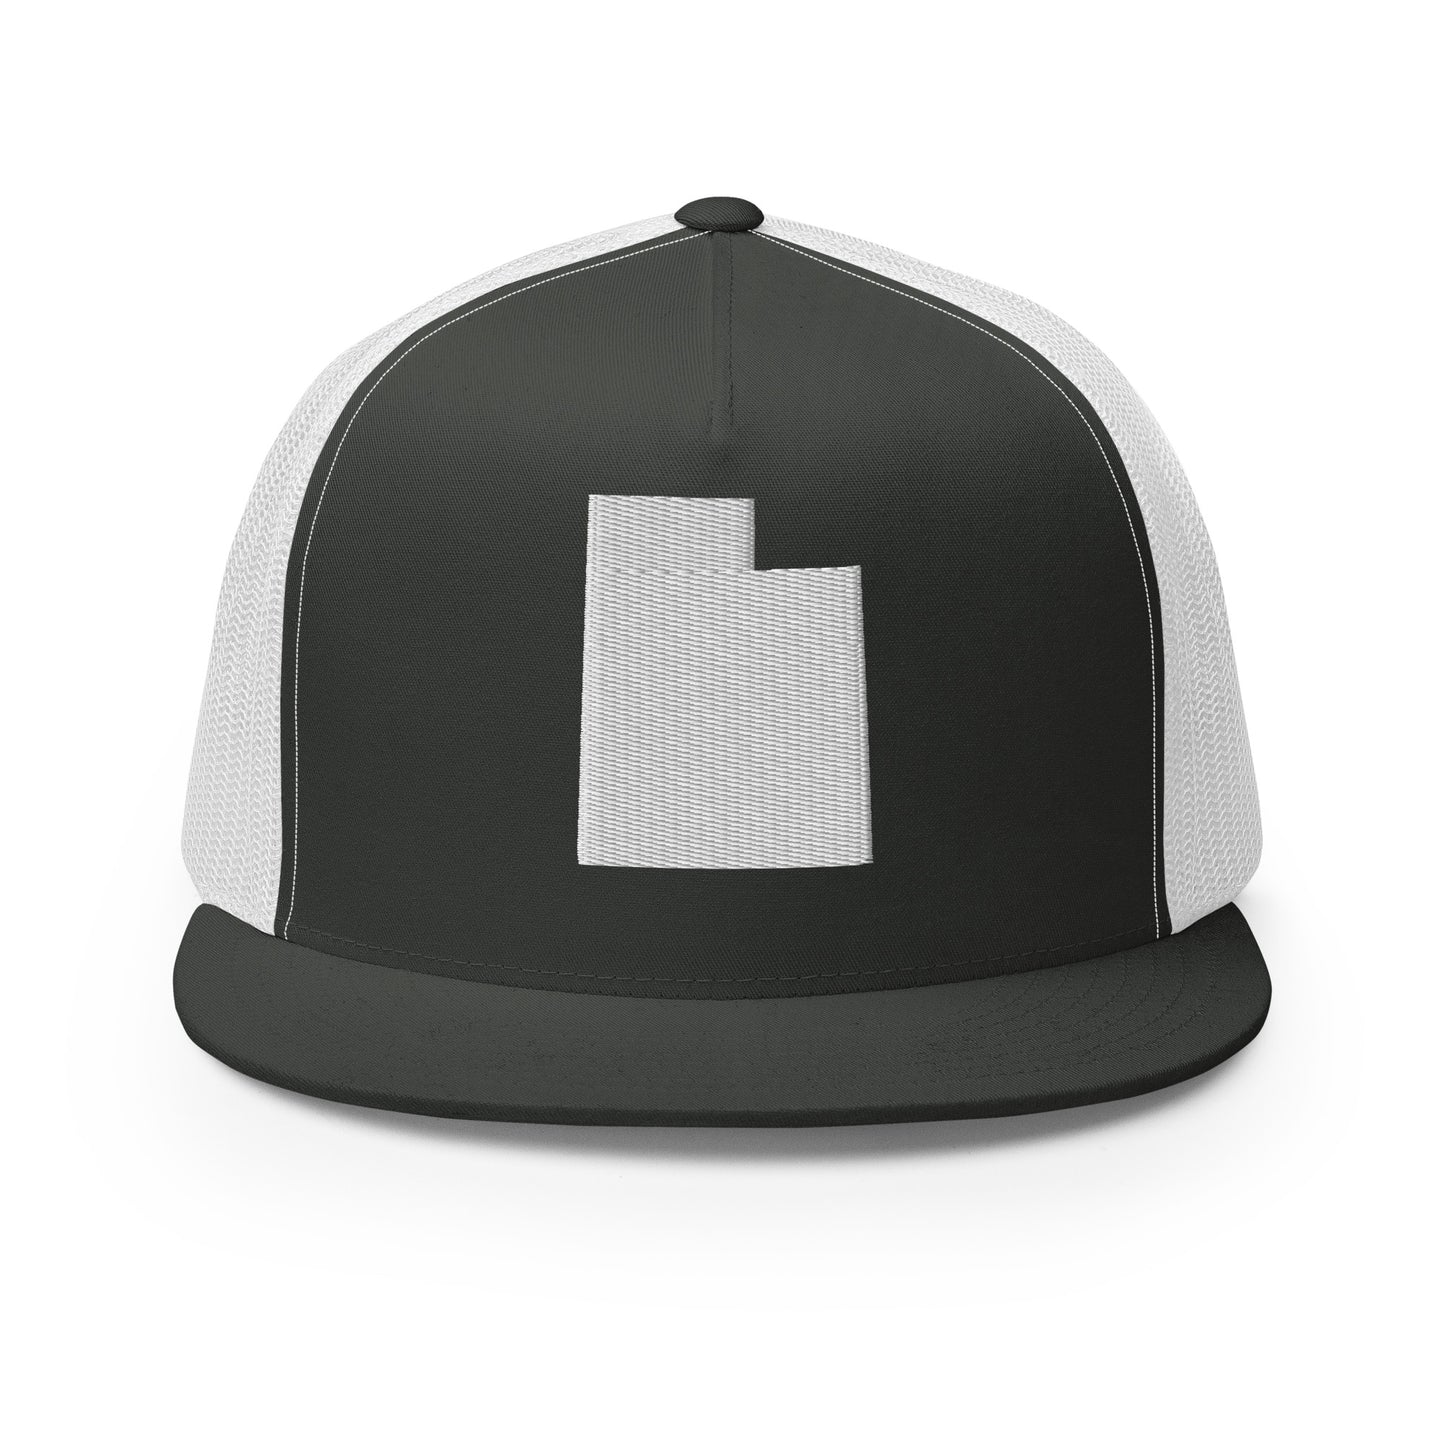 Utah State Silhouette High 5 Panel A-Frame Snapback Trucker Hat